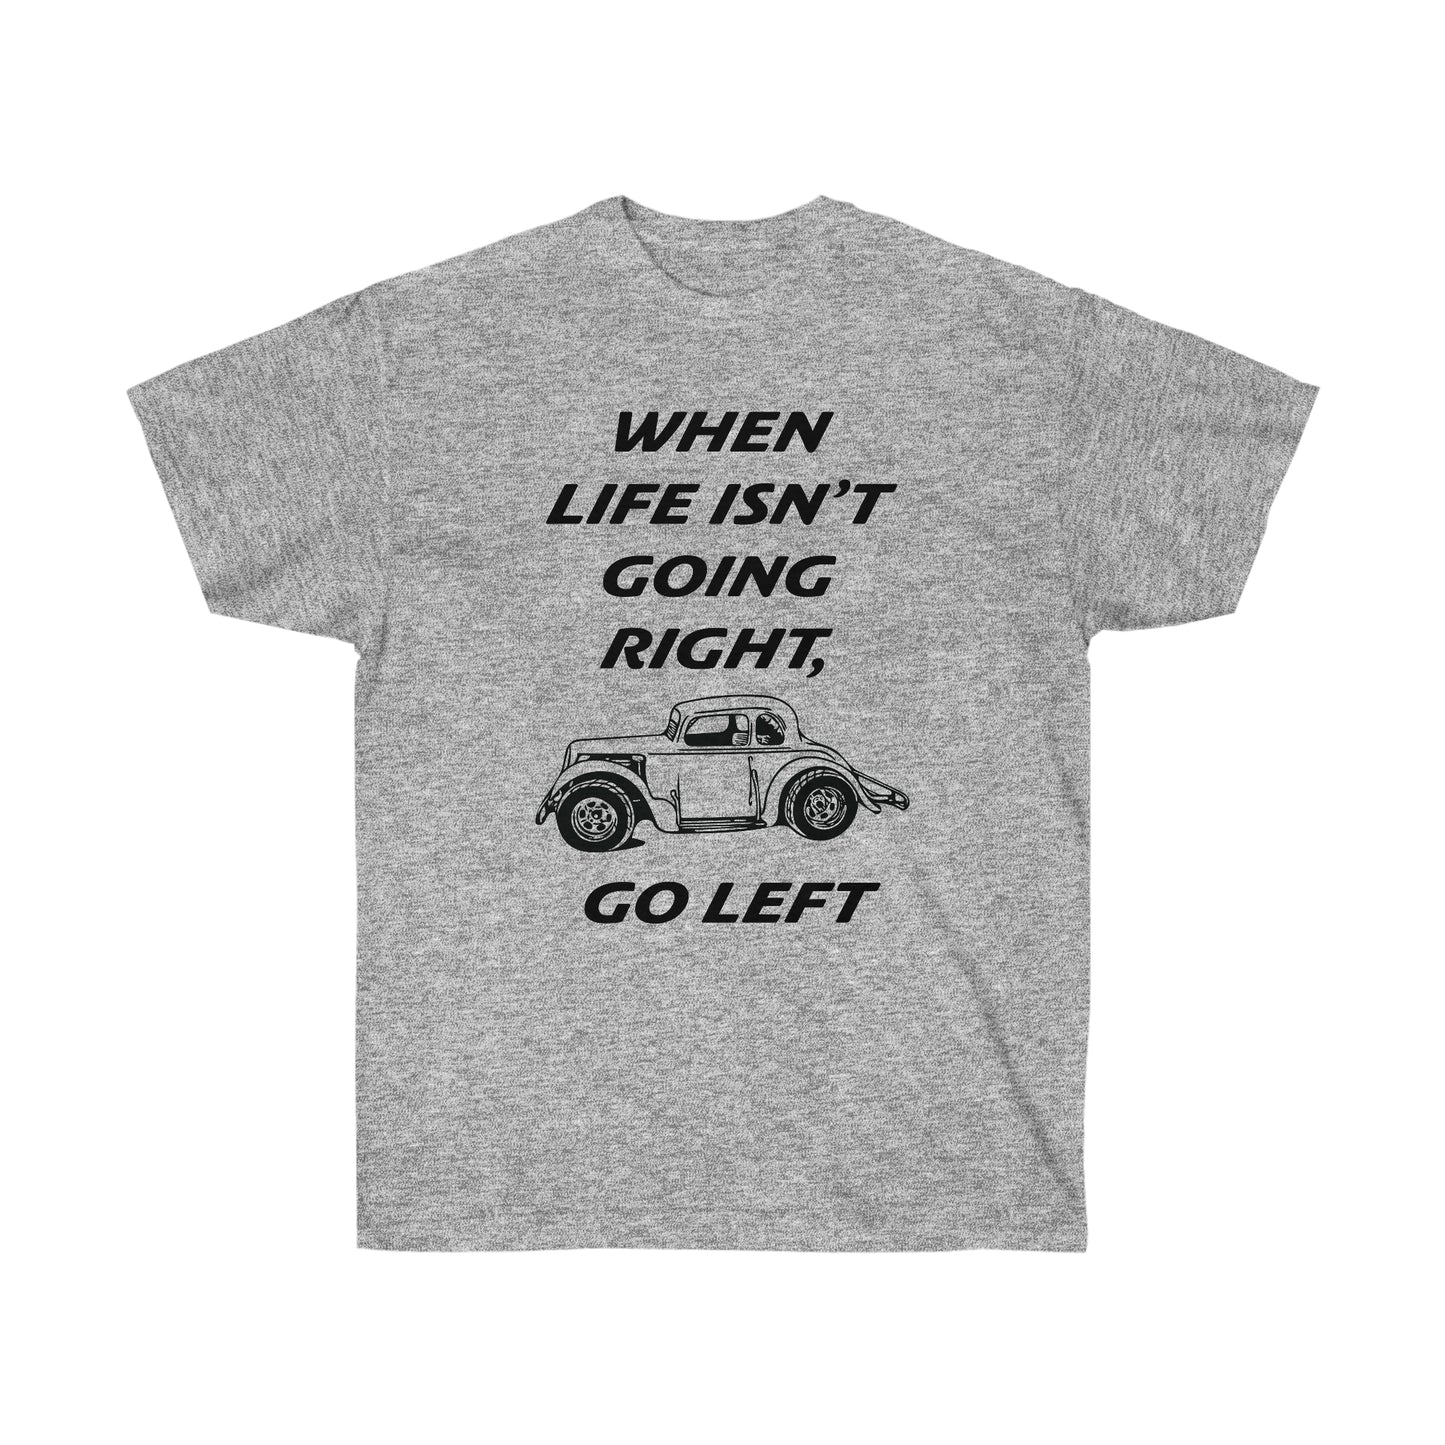 Go Left-Legend Car